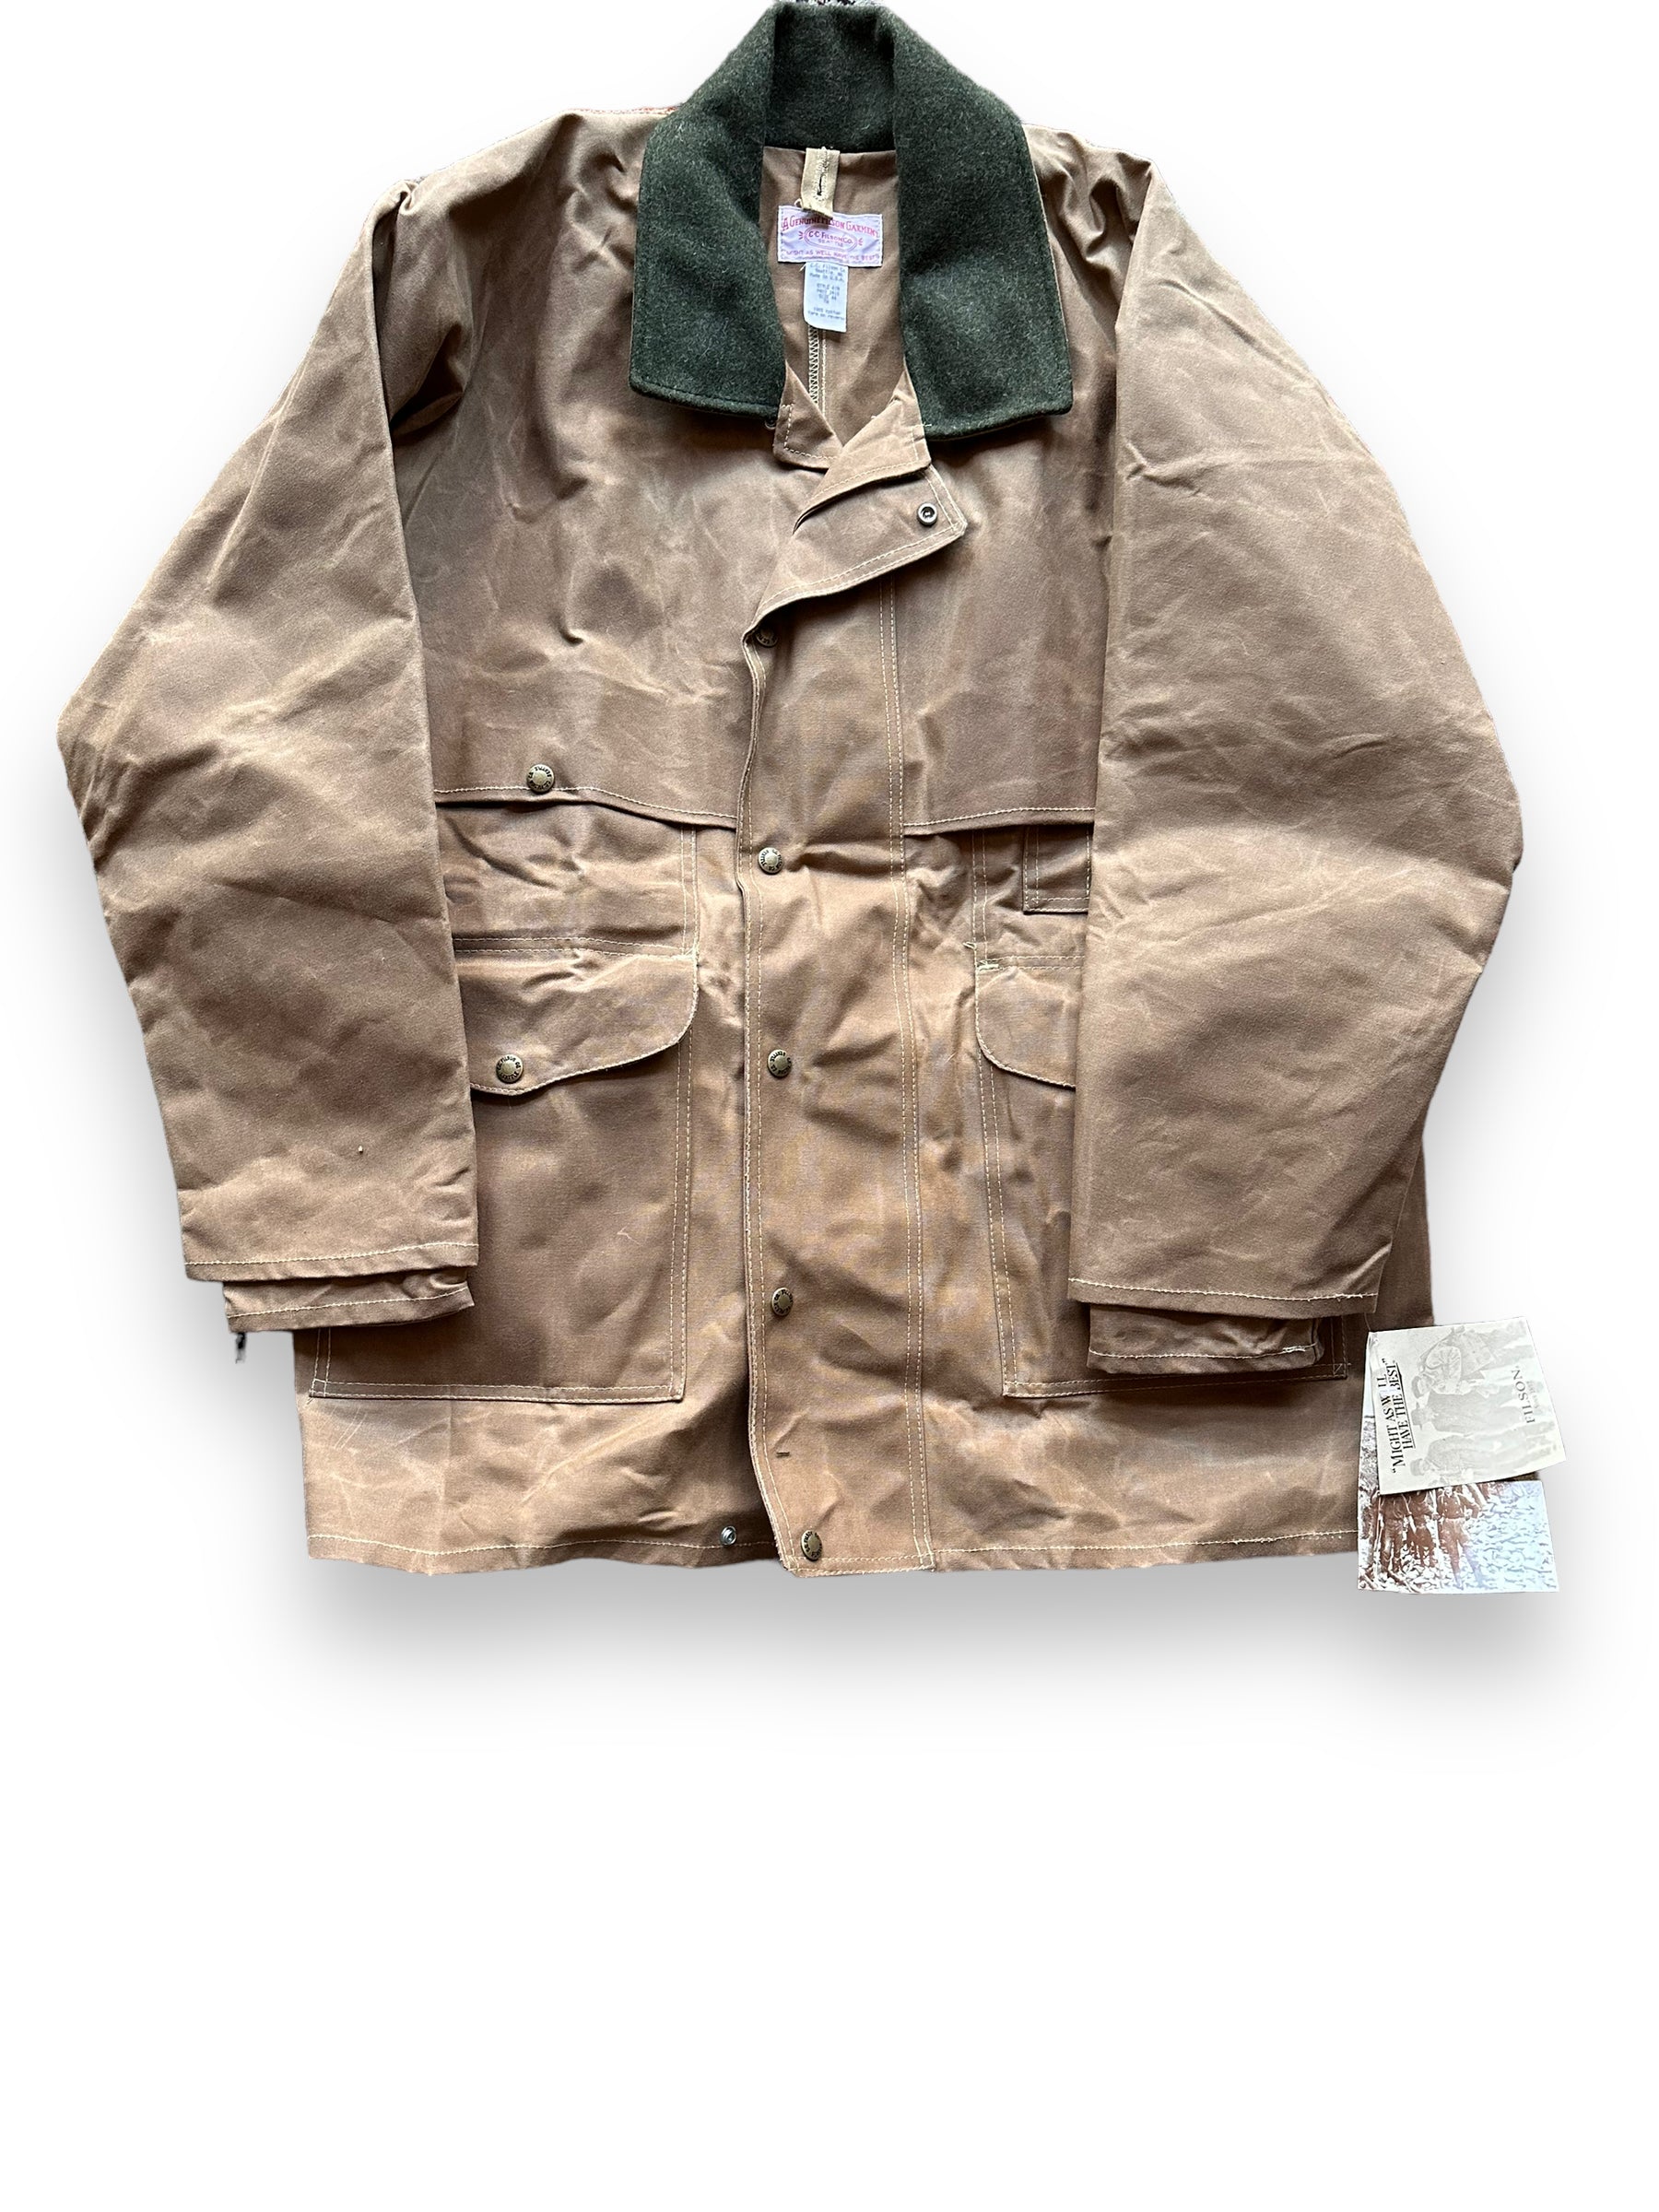 Front View of Vintage NOS Filson Tin Cloth Packer Coat SZ 44 |  Barn Owl Vintage Goods Filson | Vintage Filson Workwear Seattle